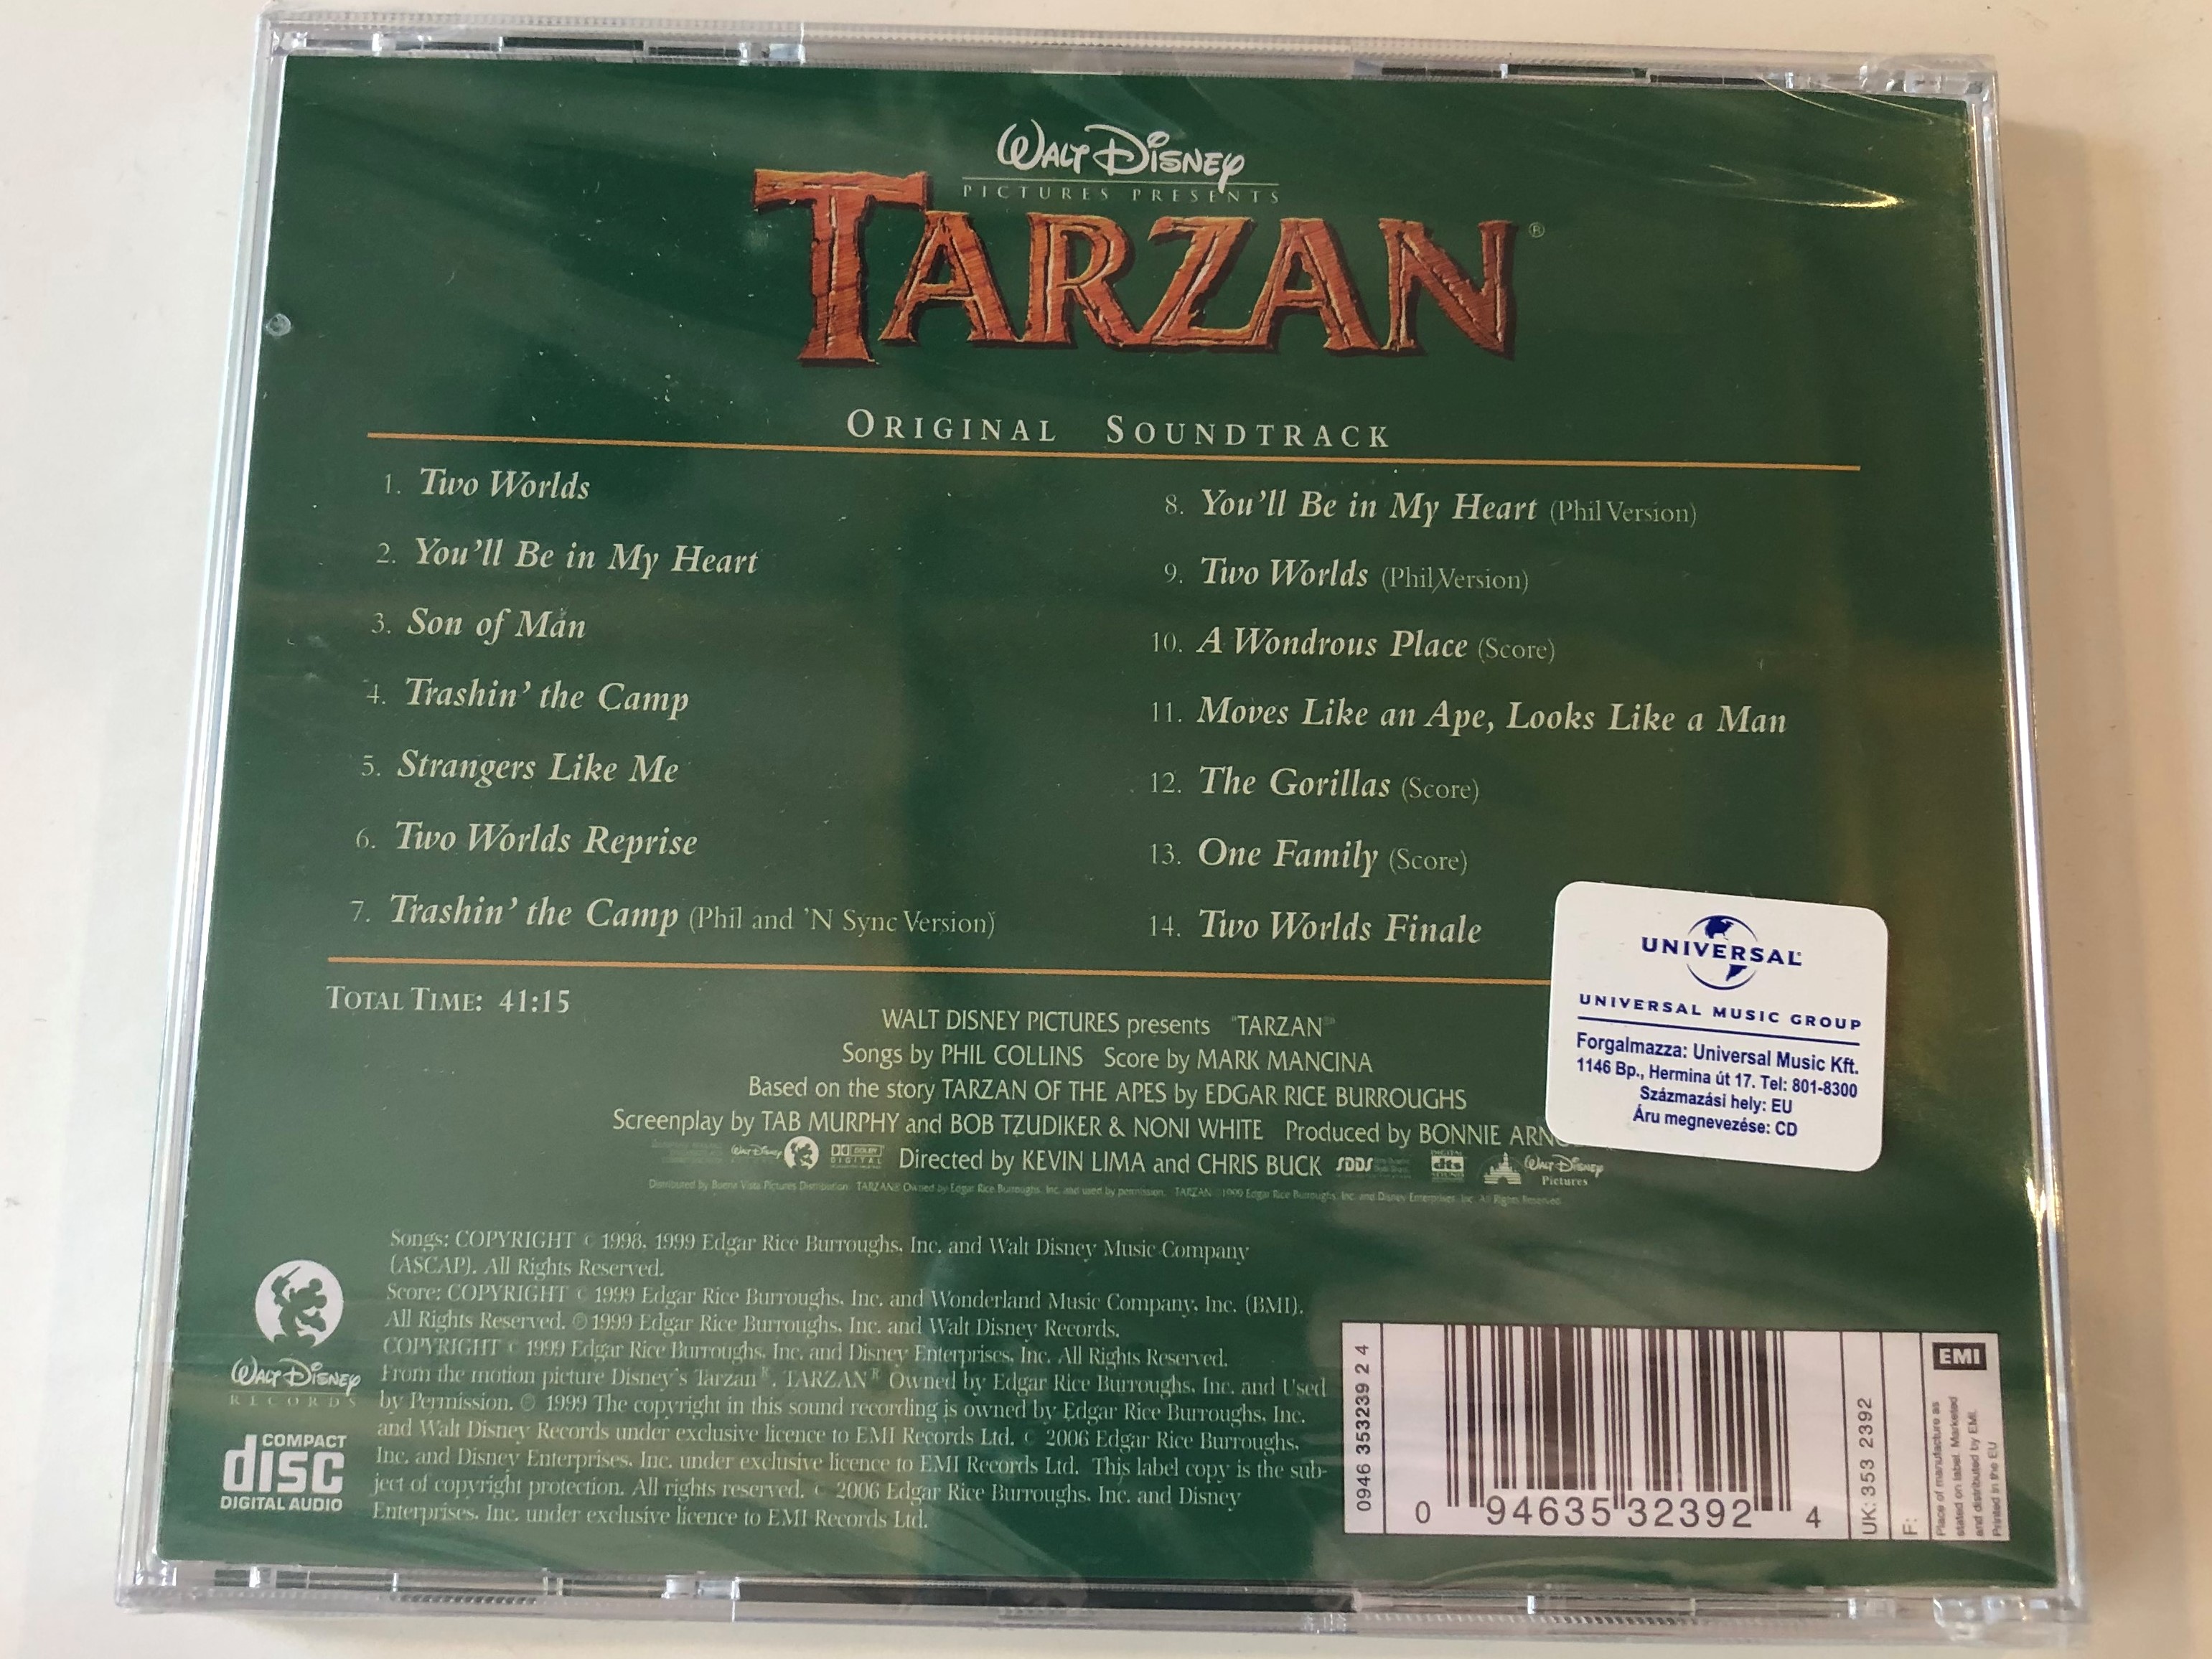 tarzan-original-soundtrack-songs-by-phil-collins-score-composed-by-mark-mancina-walt-disney-emi-audio-cd-2006-094635323924-2-.jpg